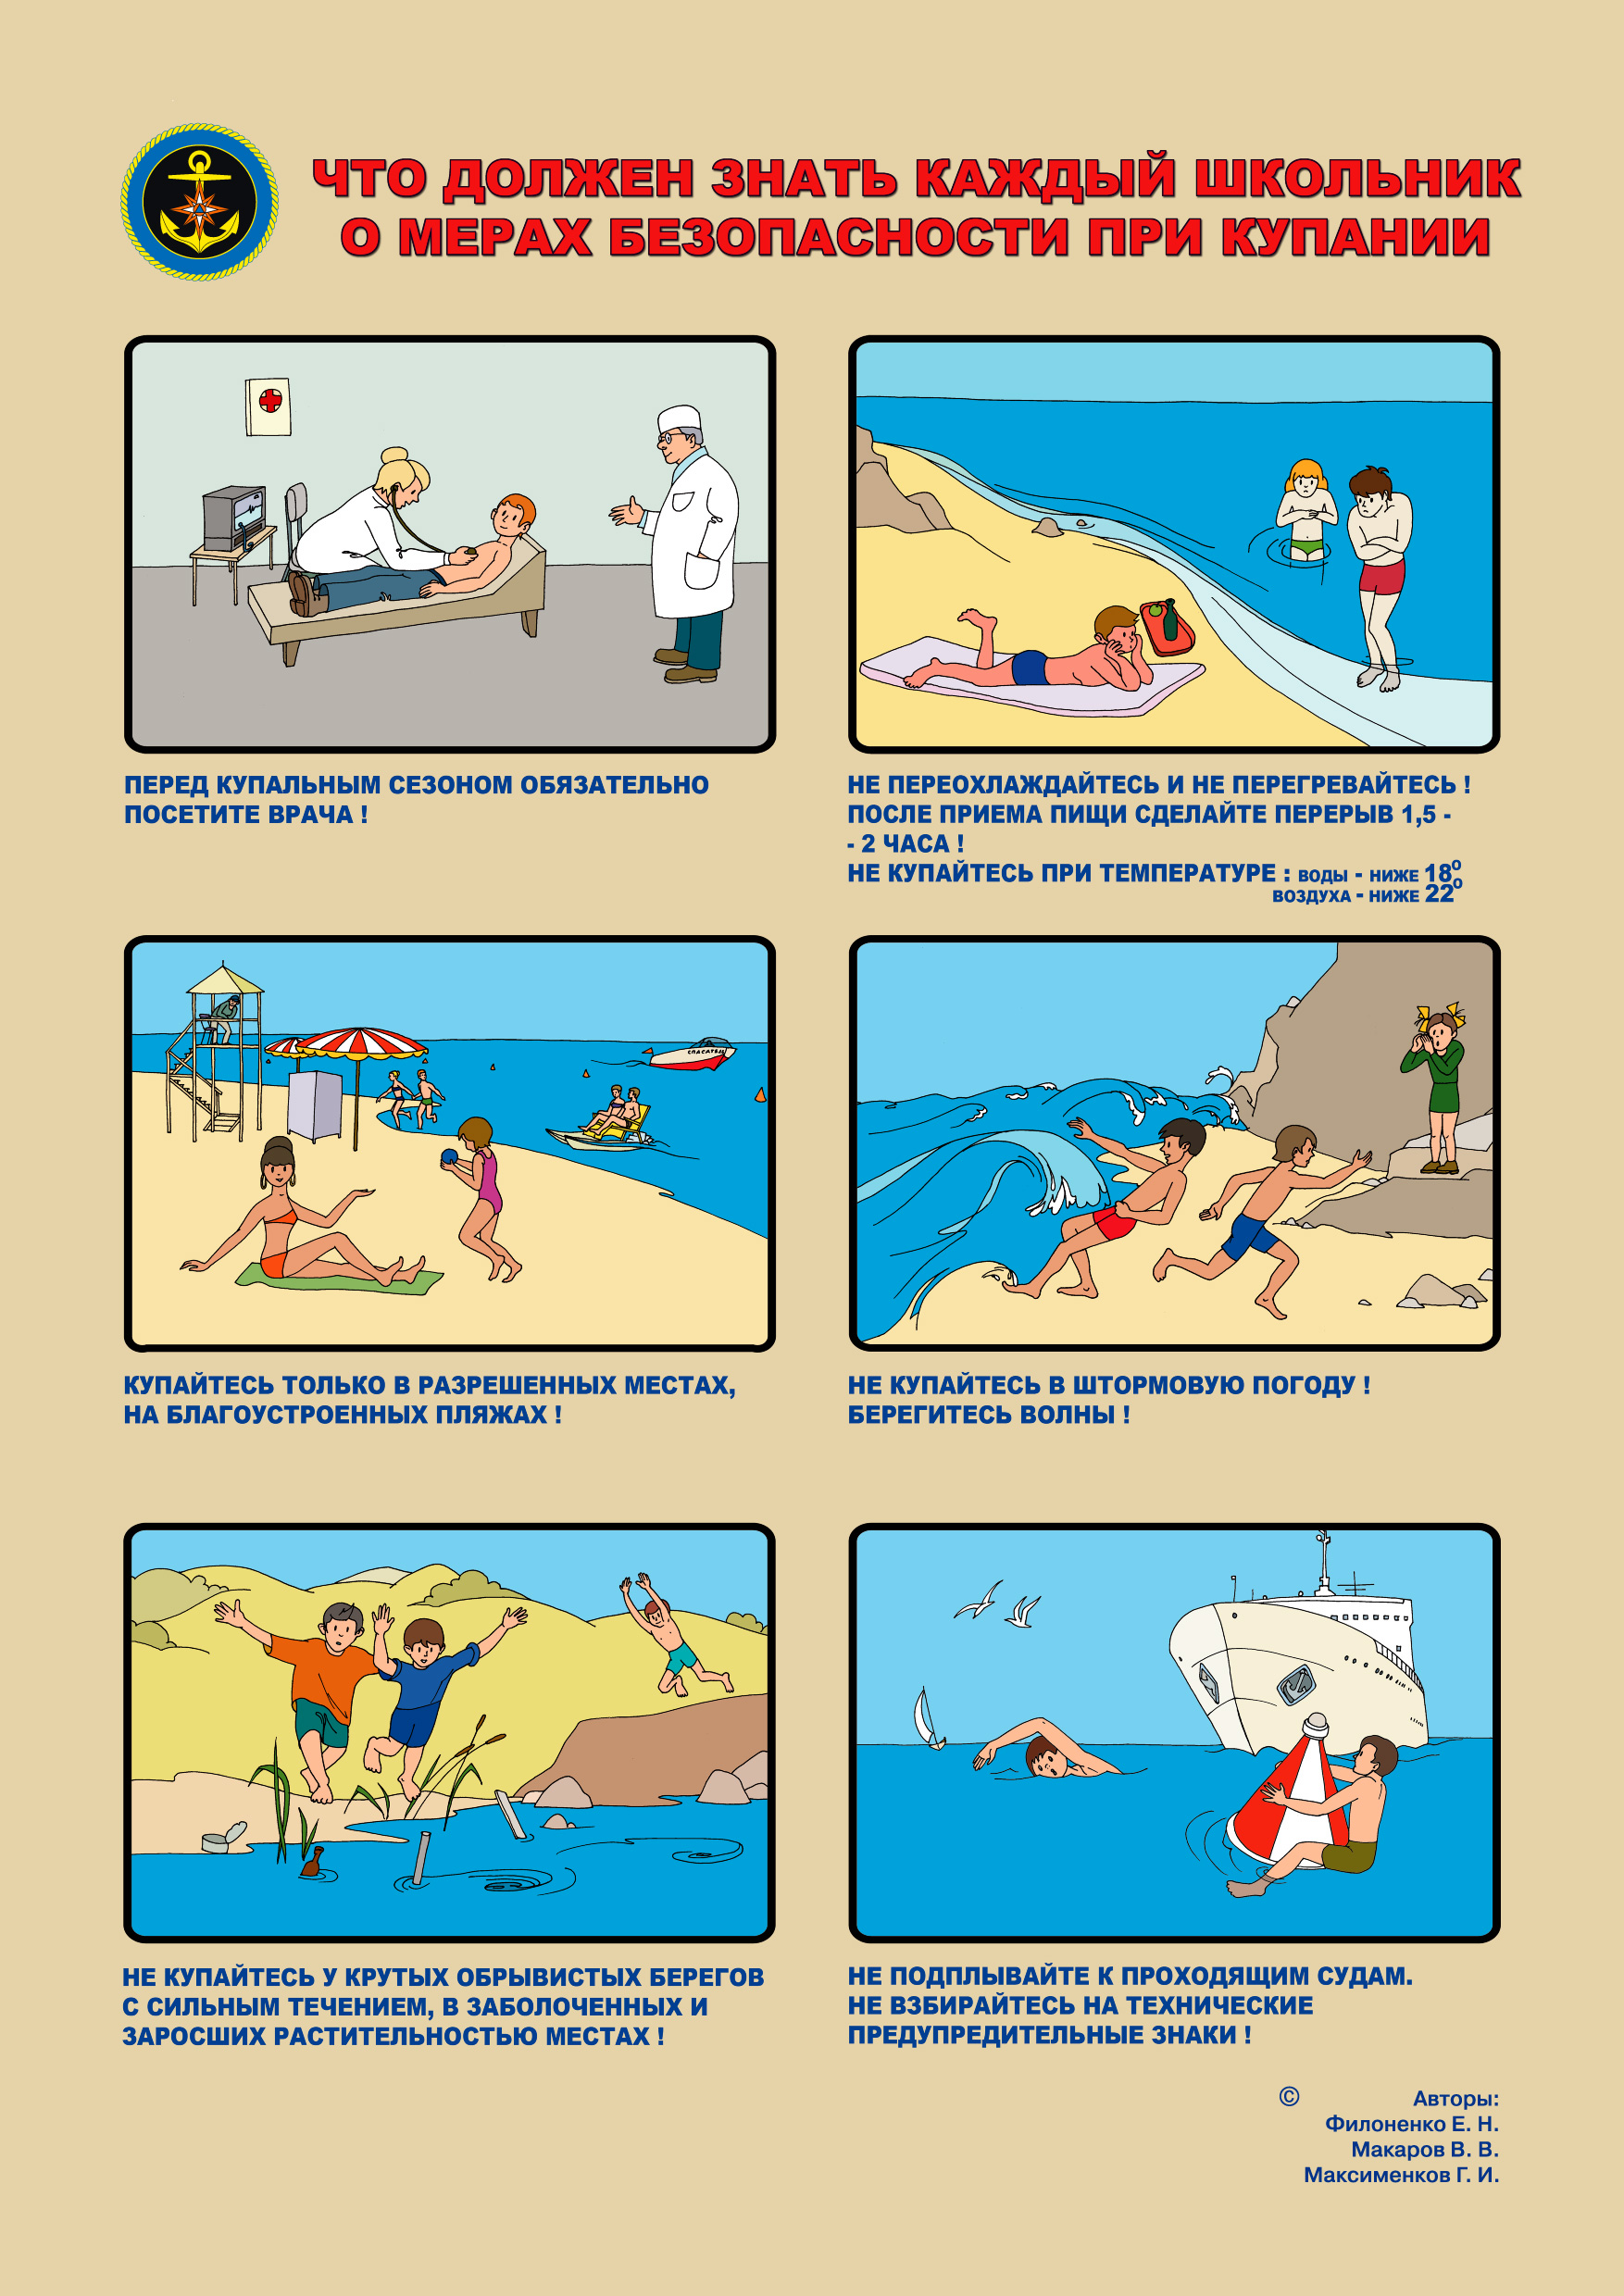 Дети на пляже, помним о безопасности!